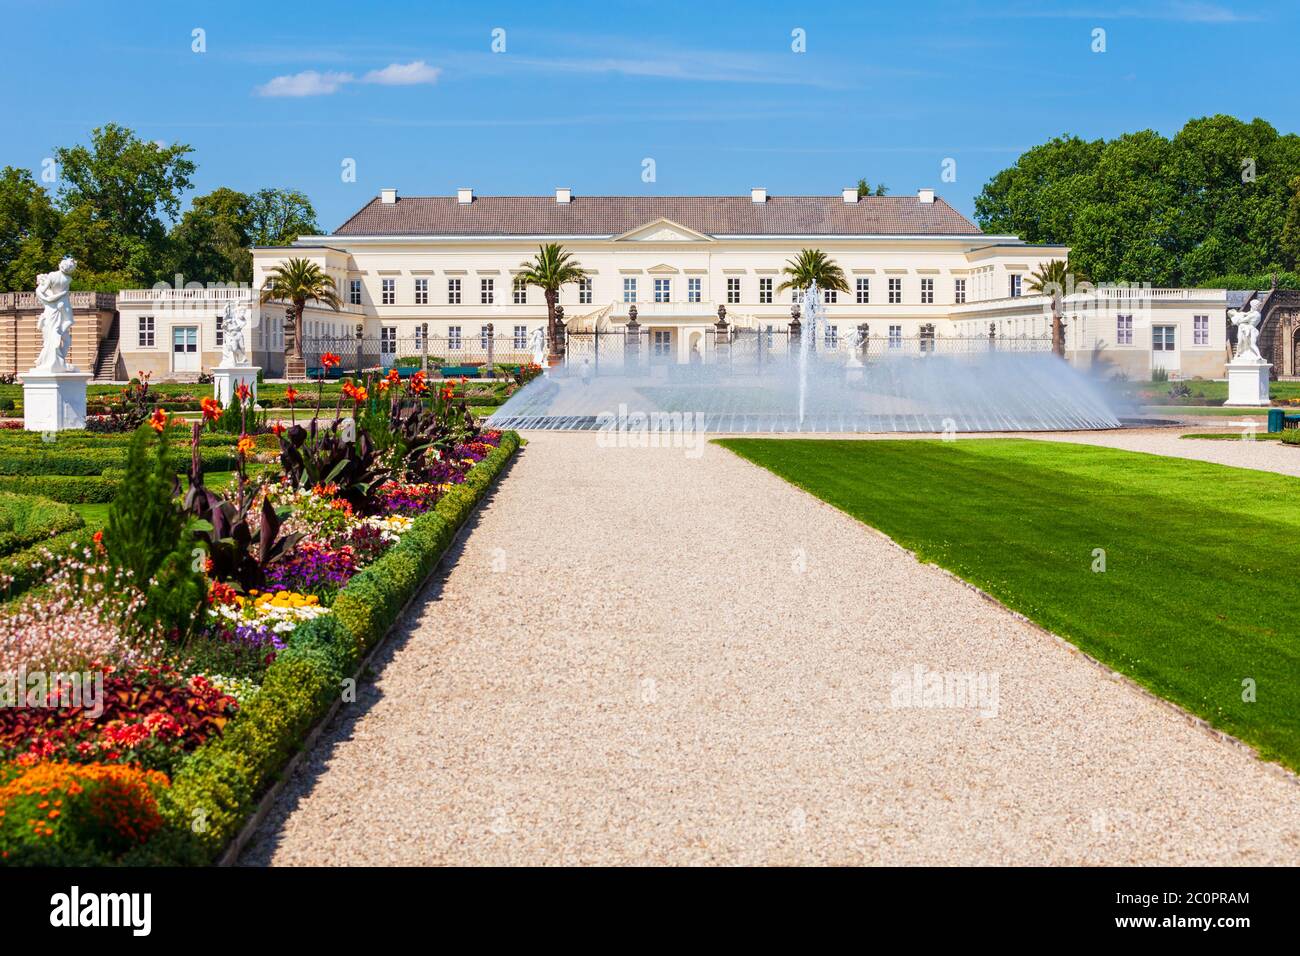 Herrenhausen Palace situato in Herrenhausen Gardens nella città di Hannover, Germania Foto Stock